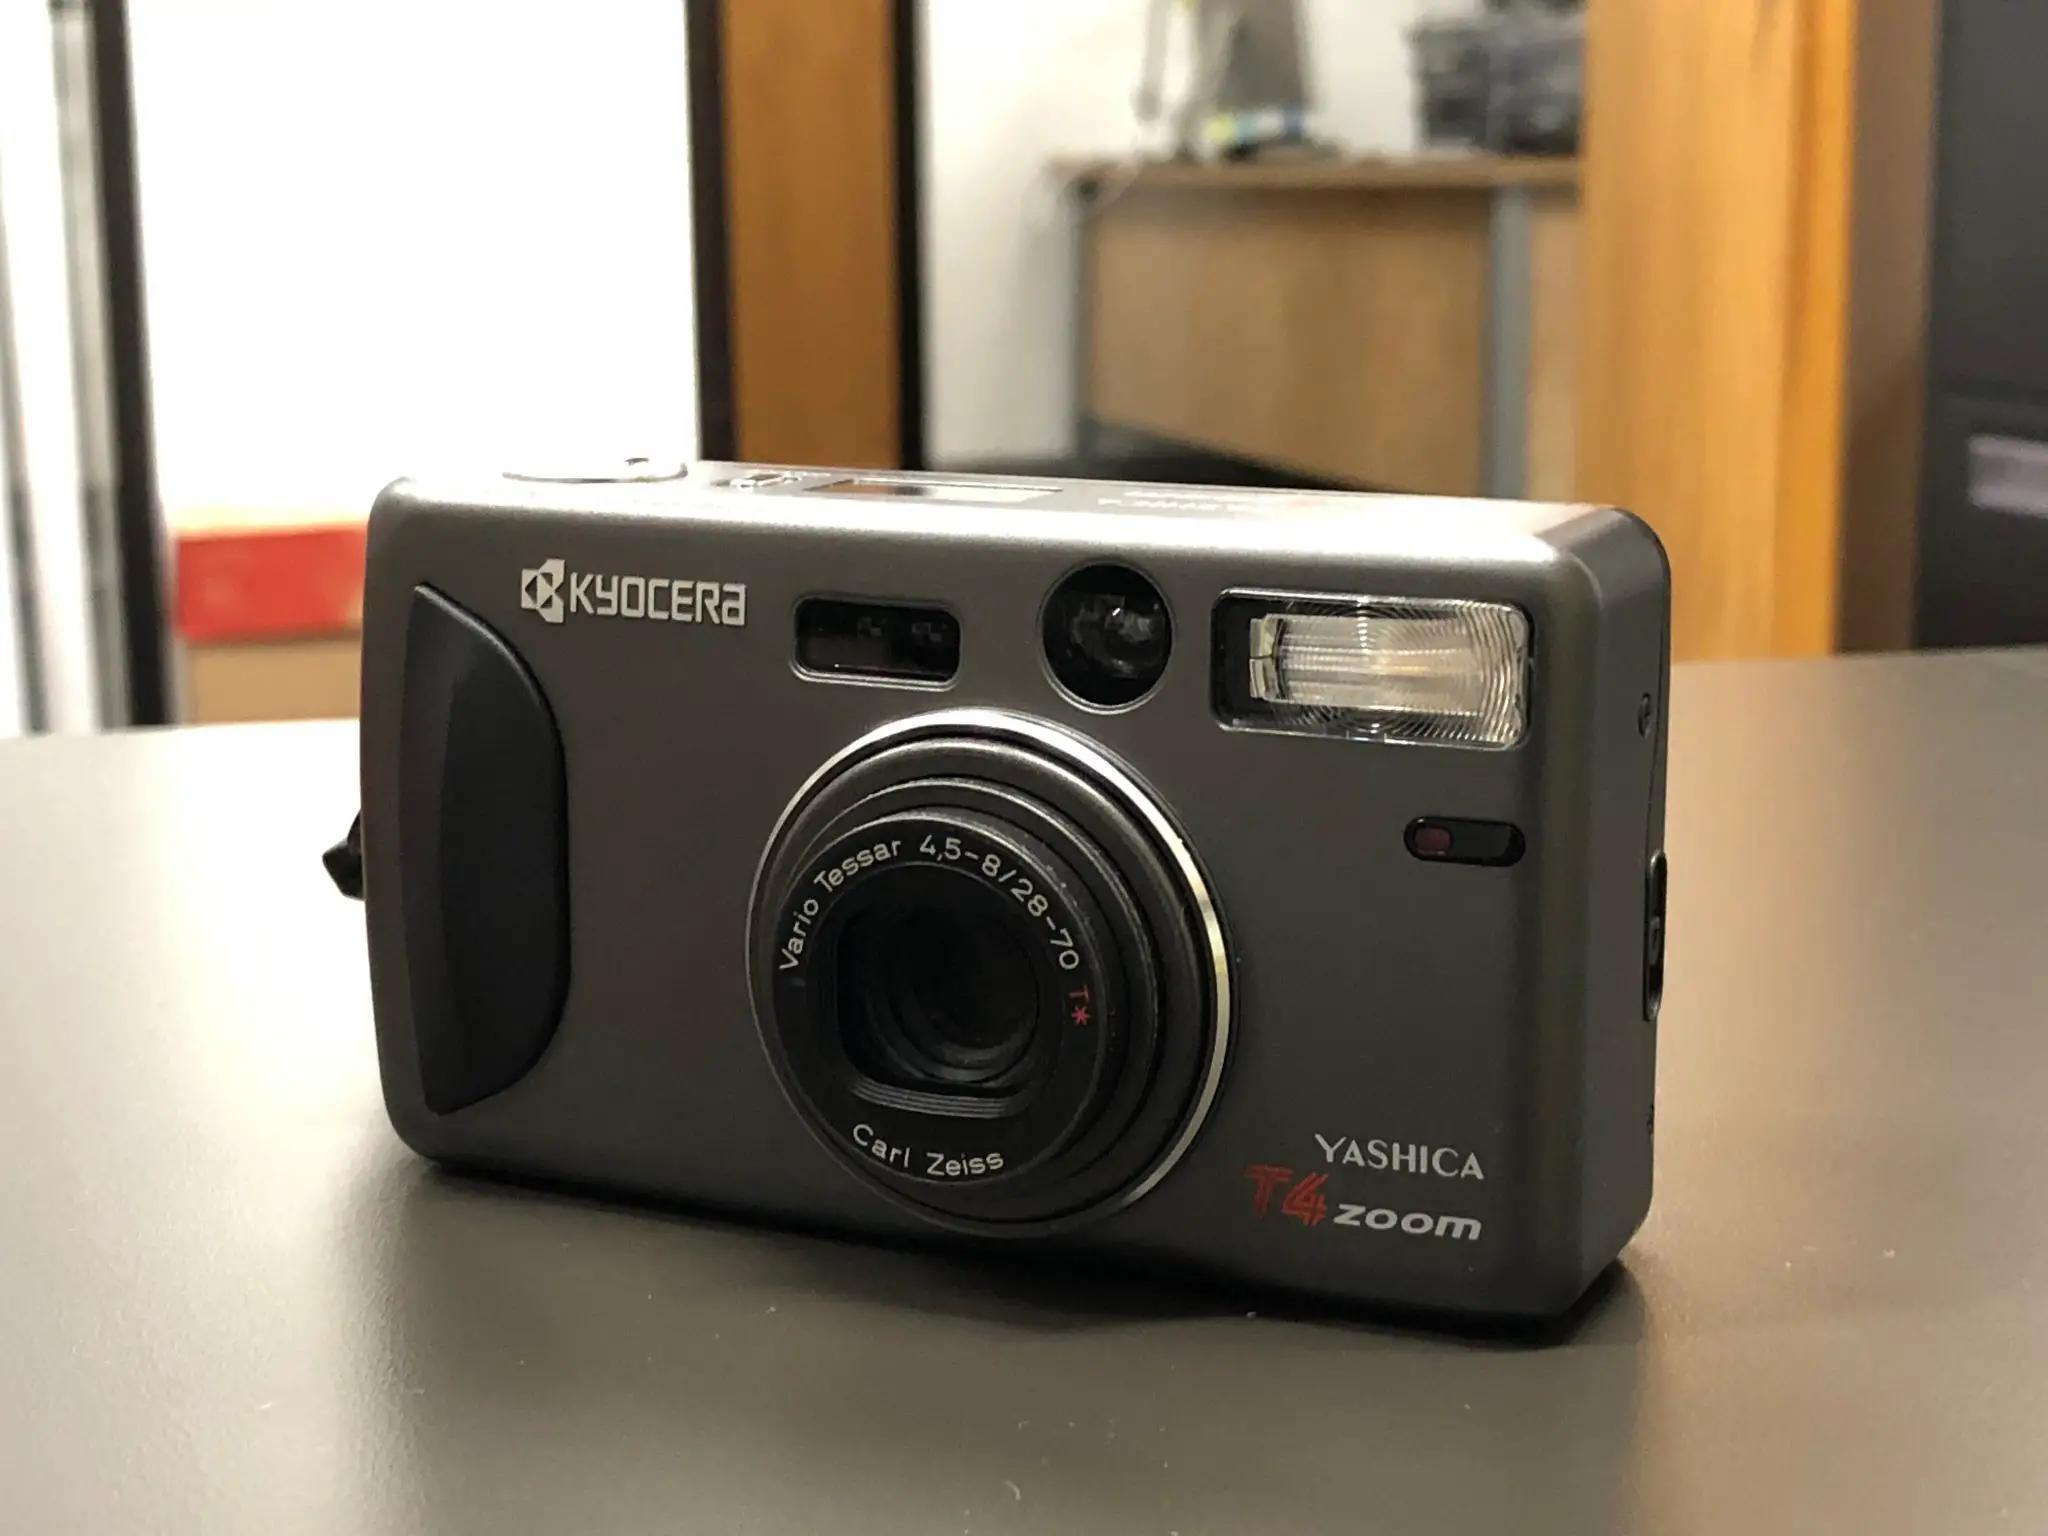 KYOCERA T-zoom - フィルムカメラ